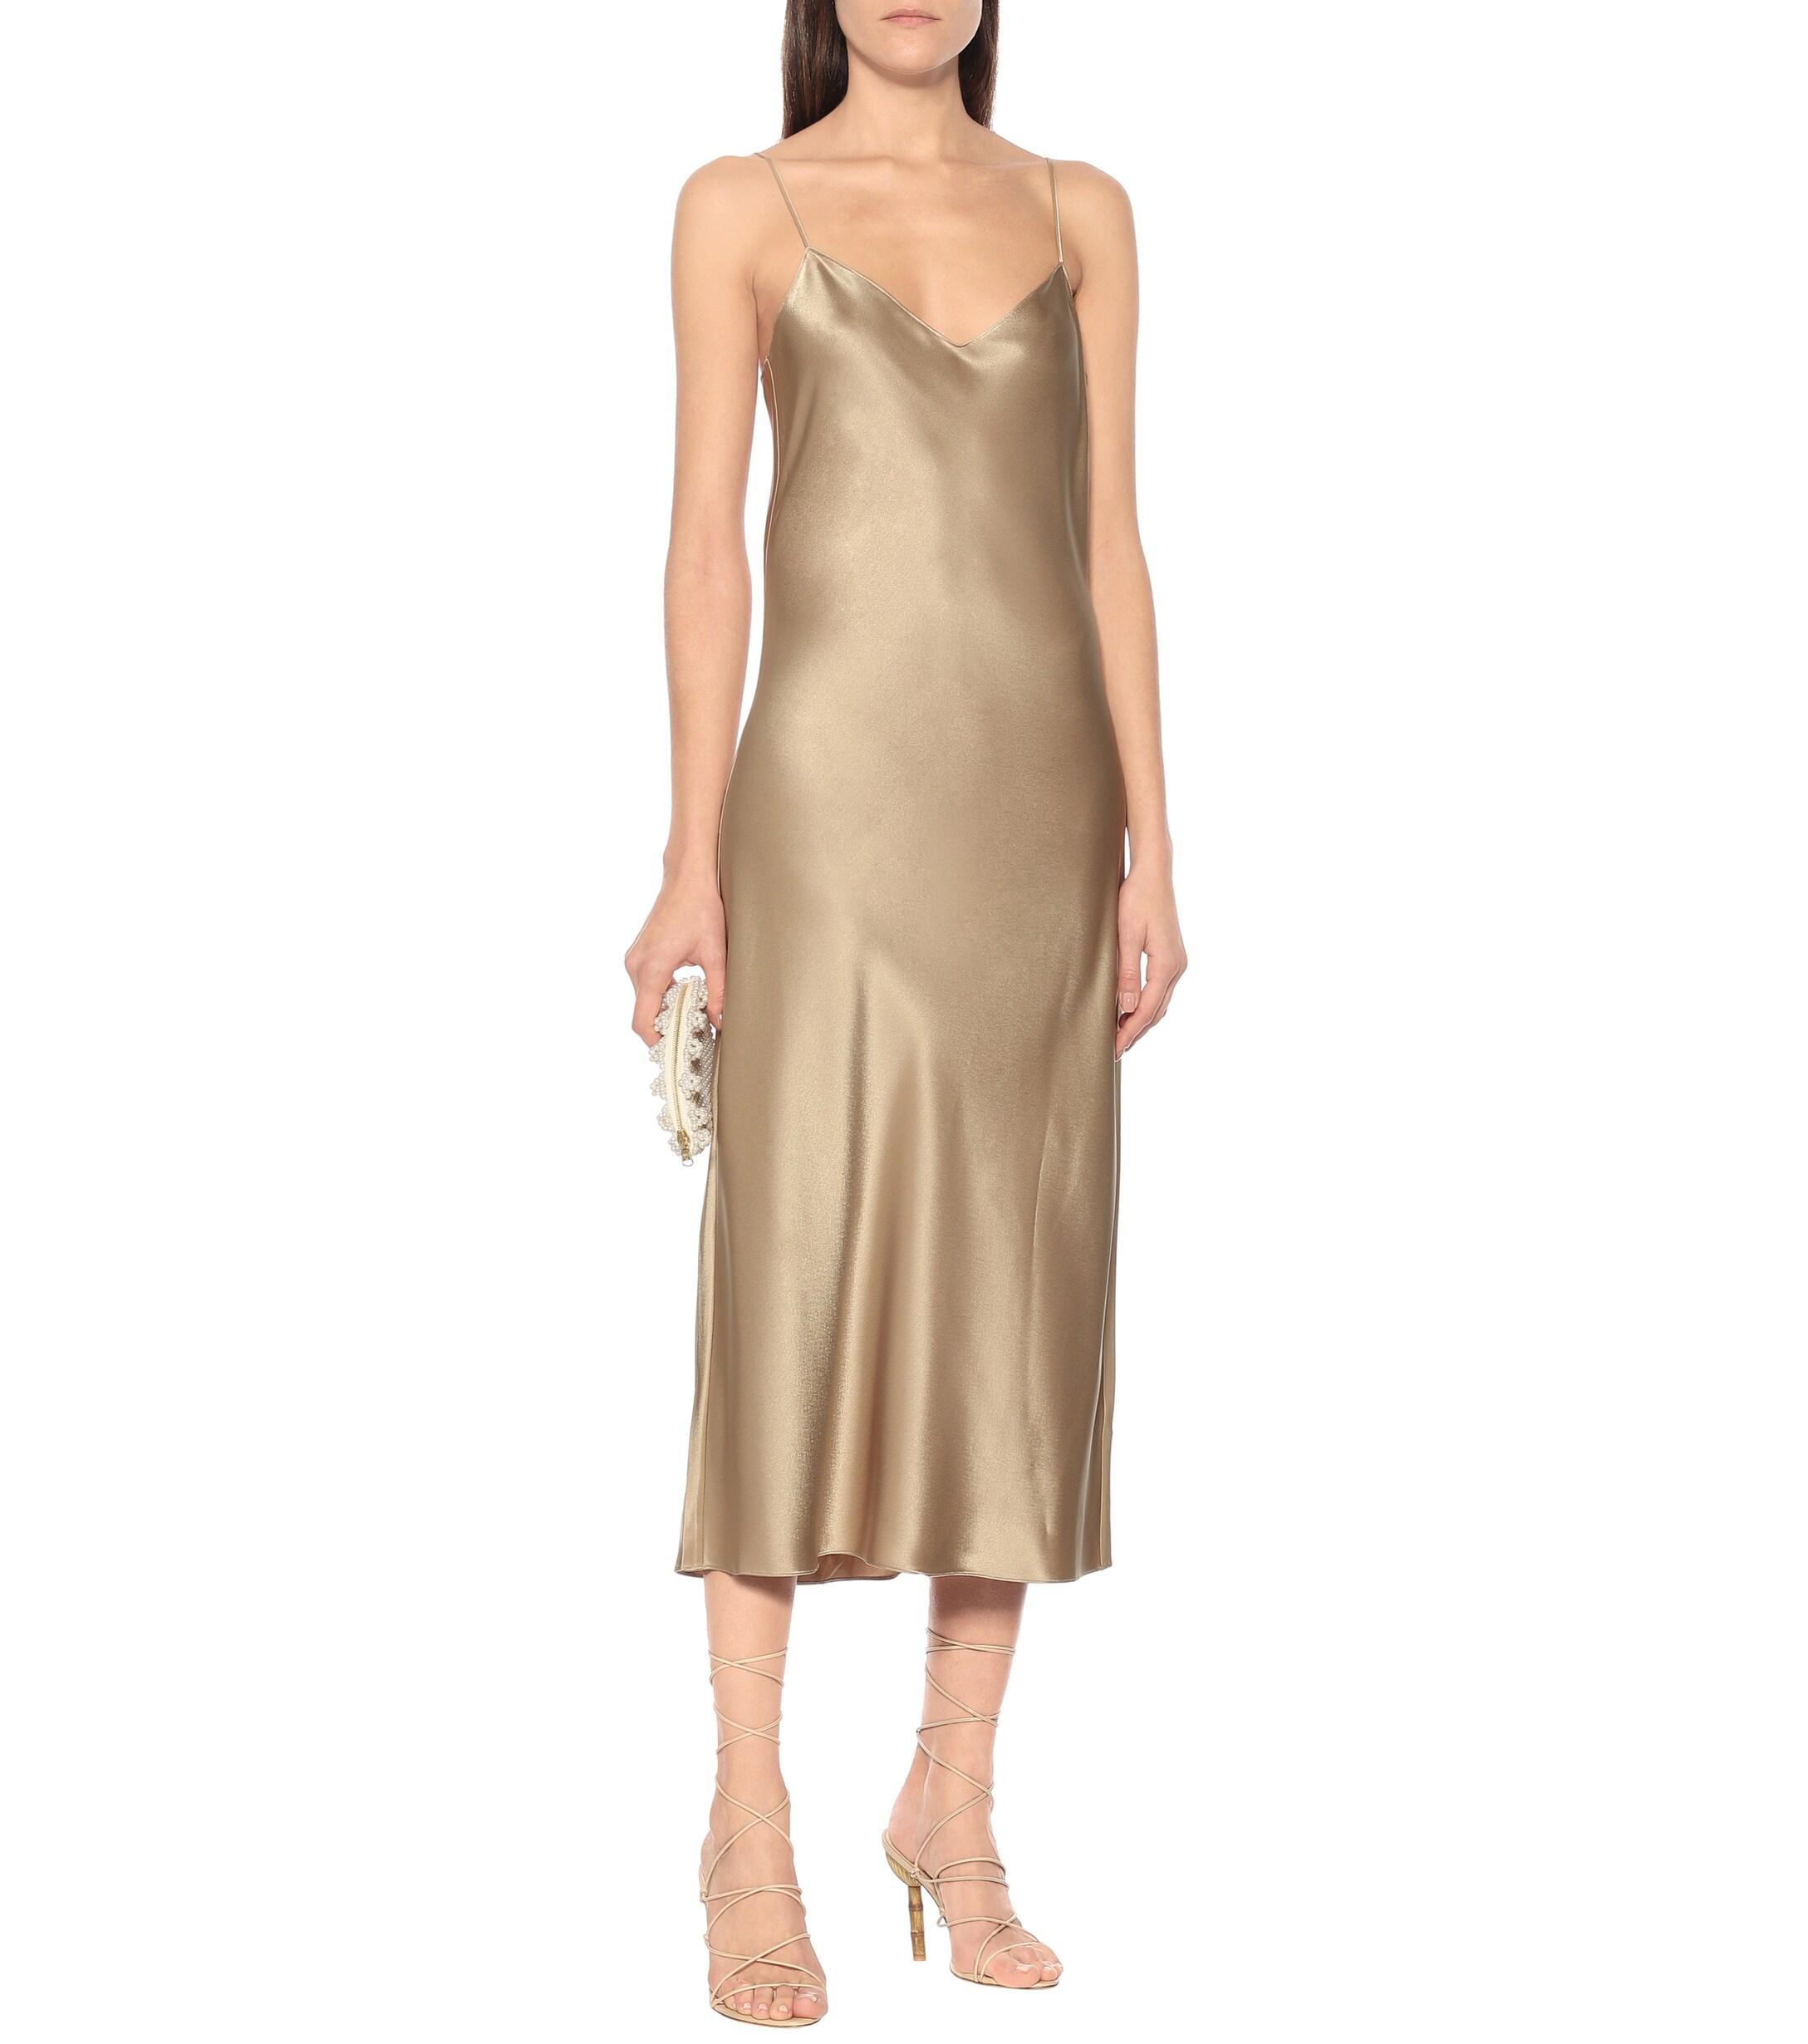 Polo Ralph Lauren Satin Slip Dress in Gold (Metallic) - Lyst